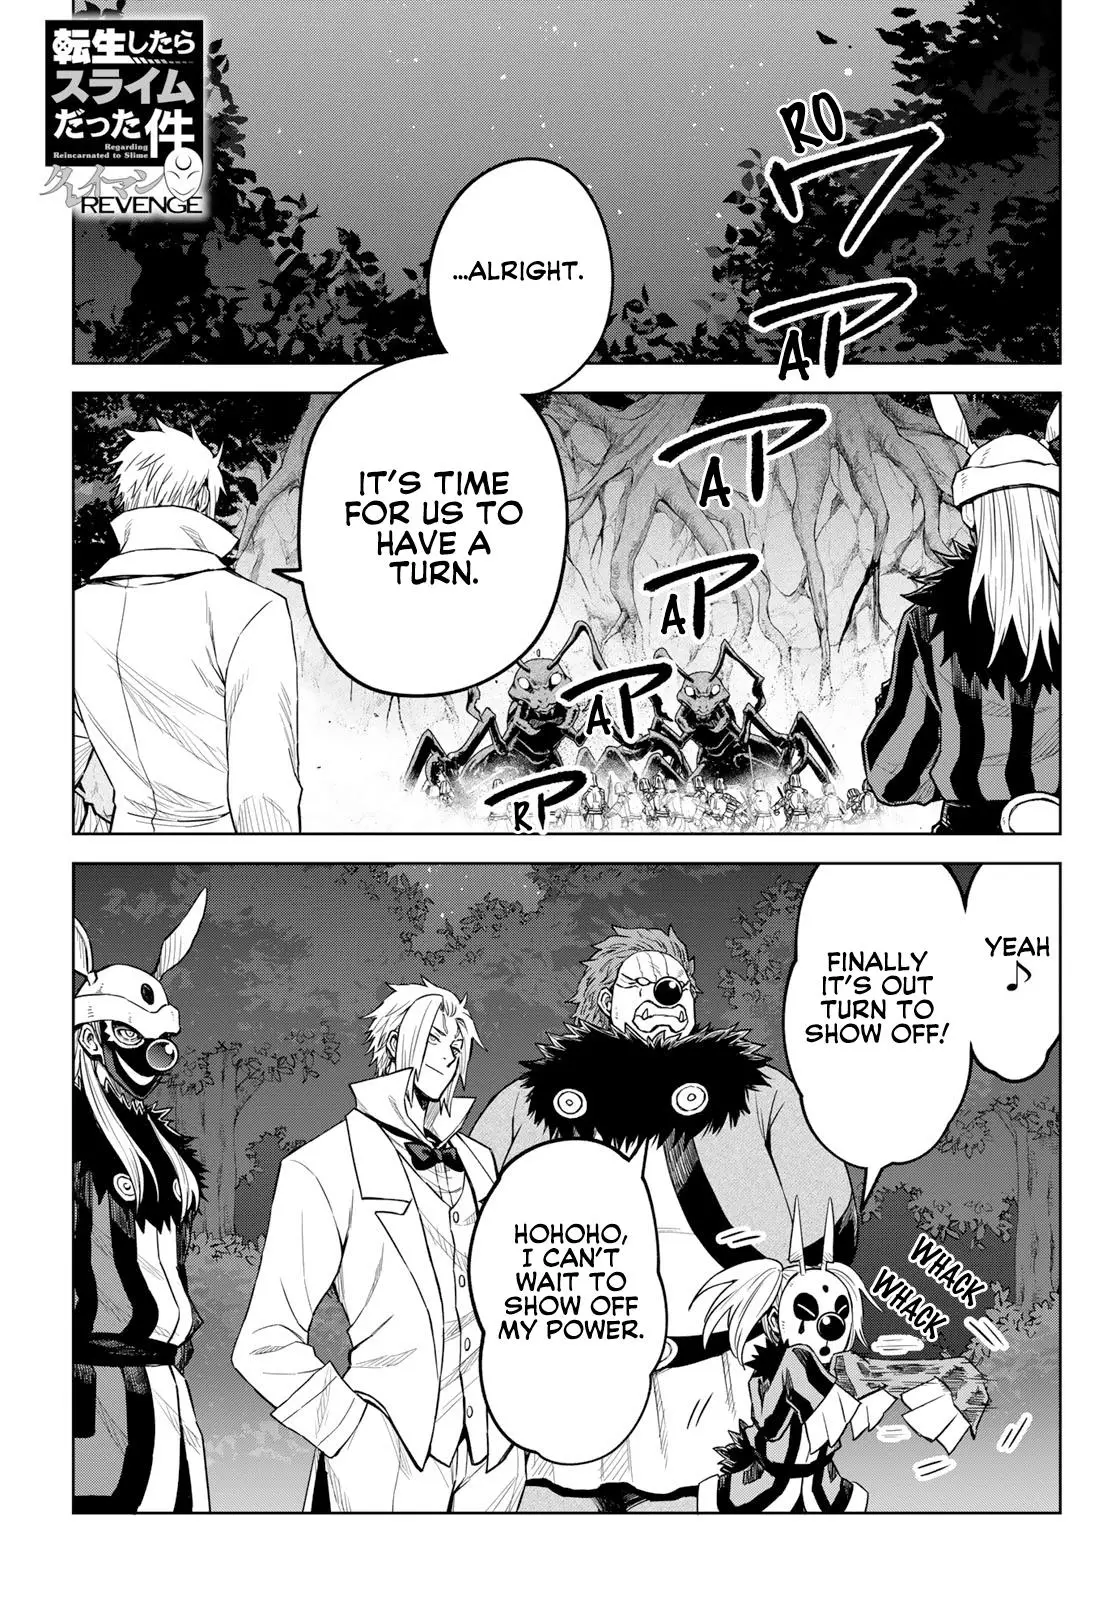 Tensei Shitara Slime Datta Ken: Clayman Revenge - 13 page 1-6ee25559